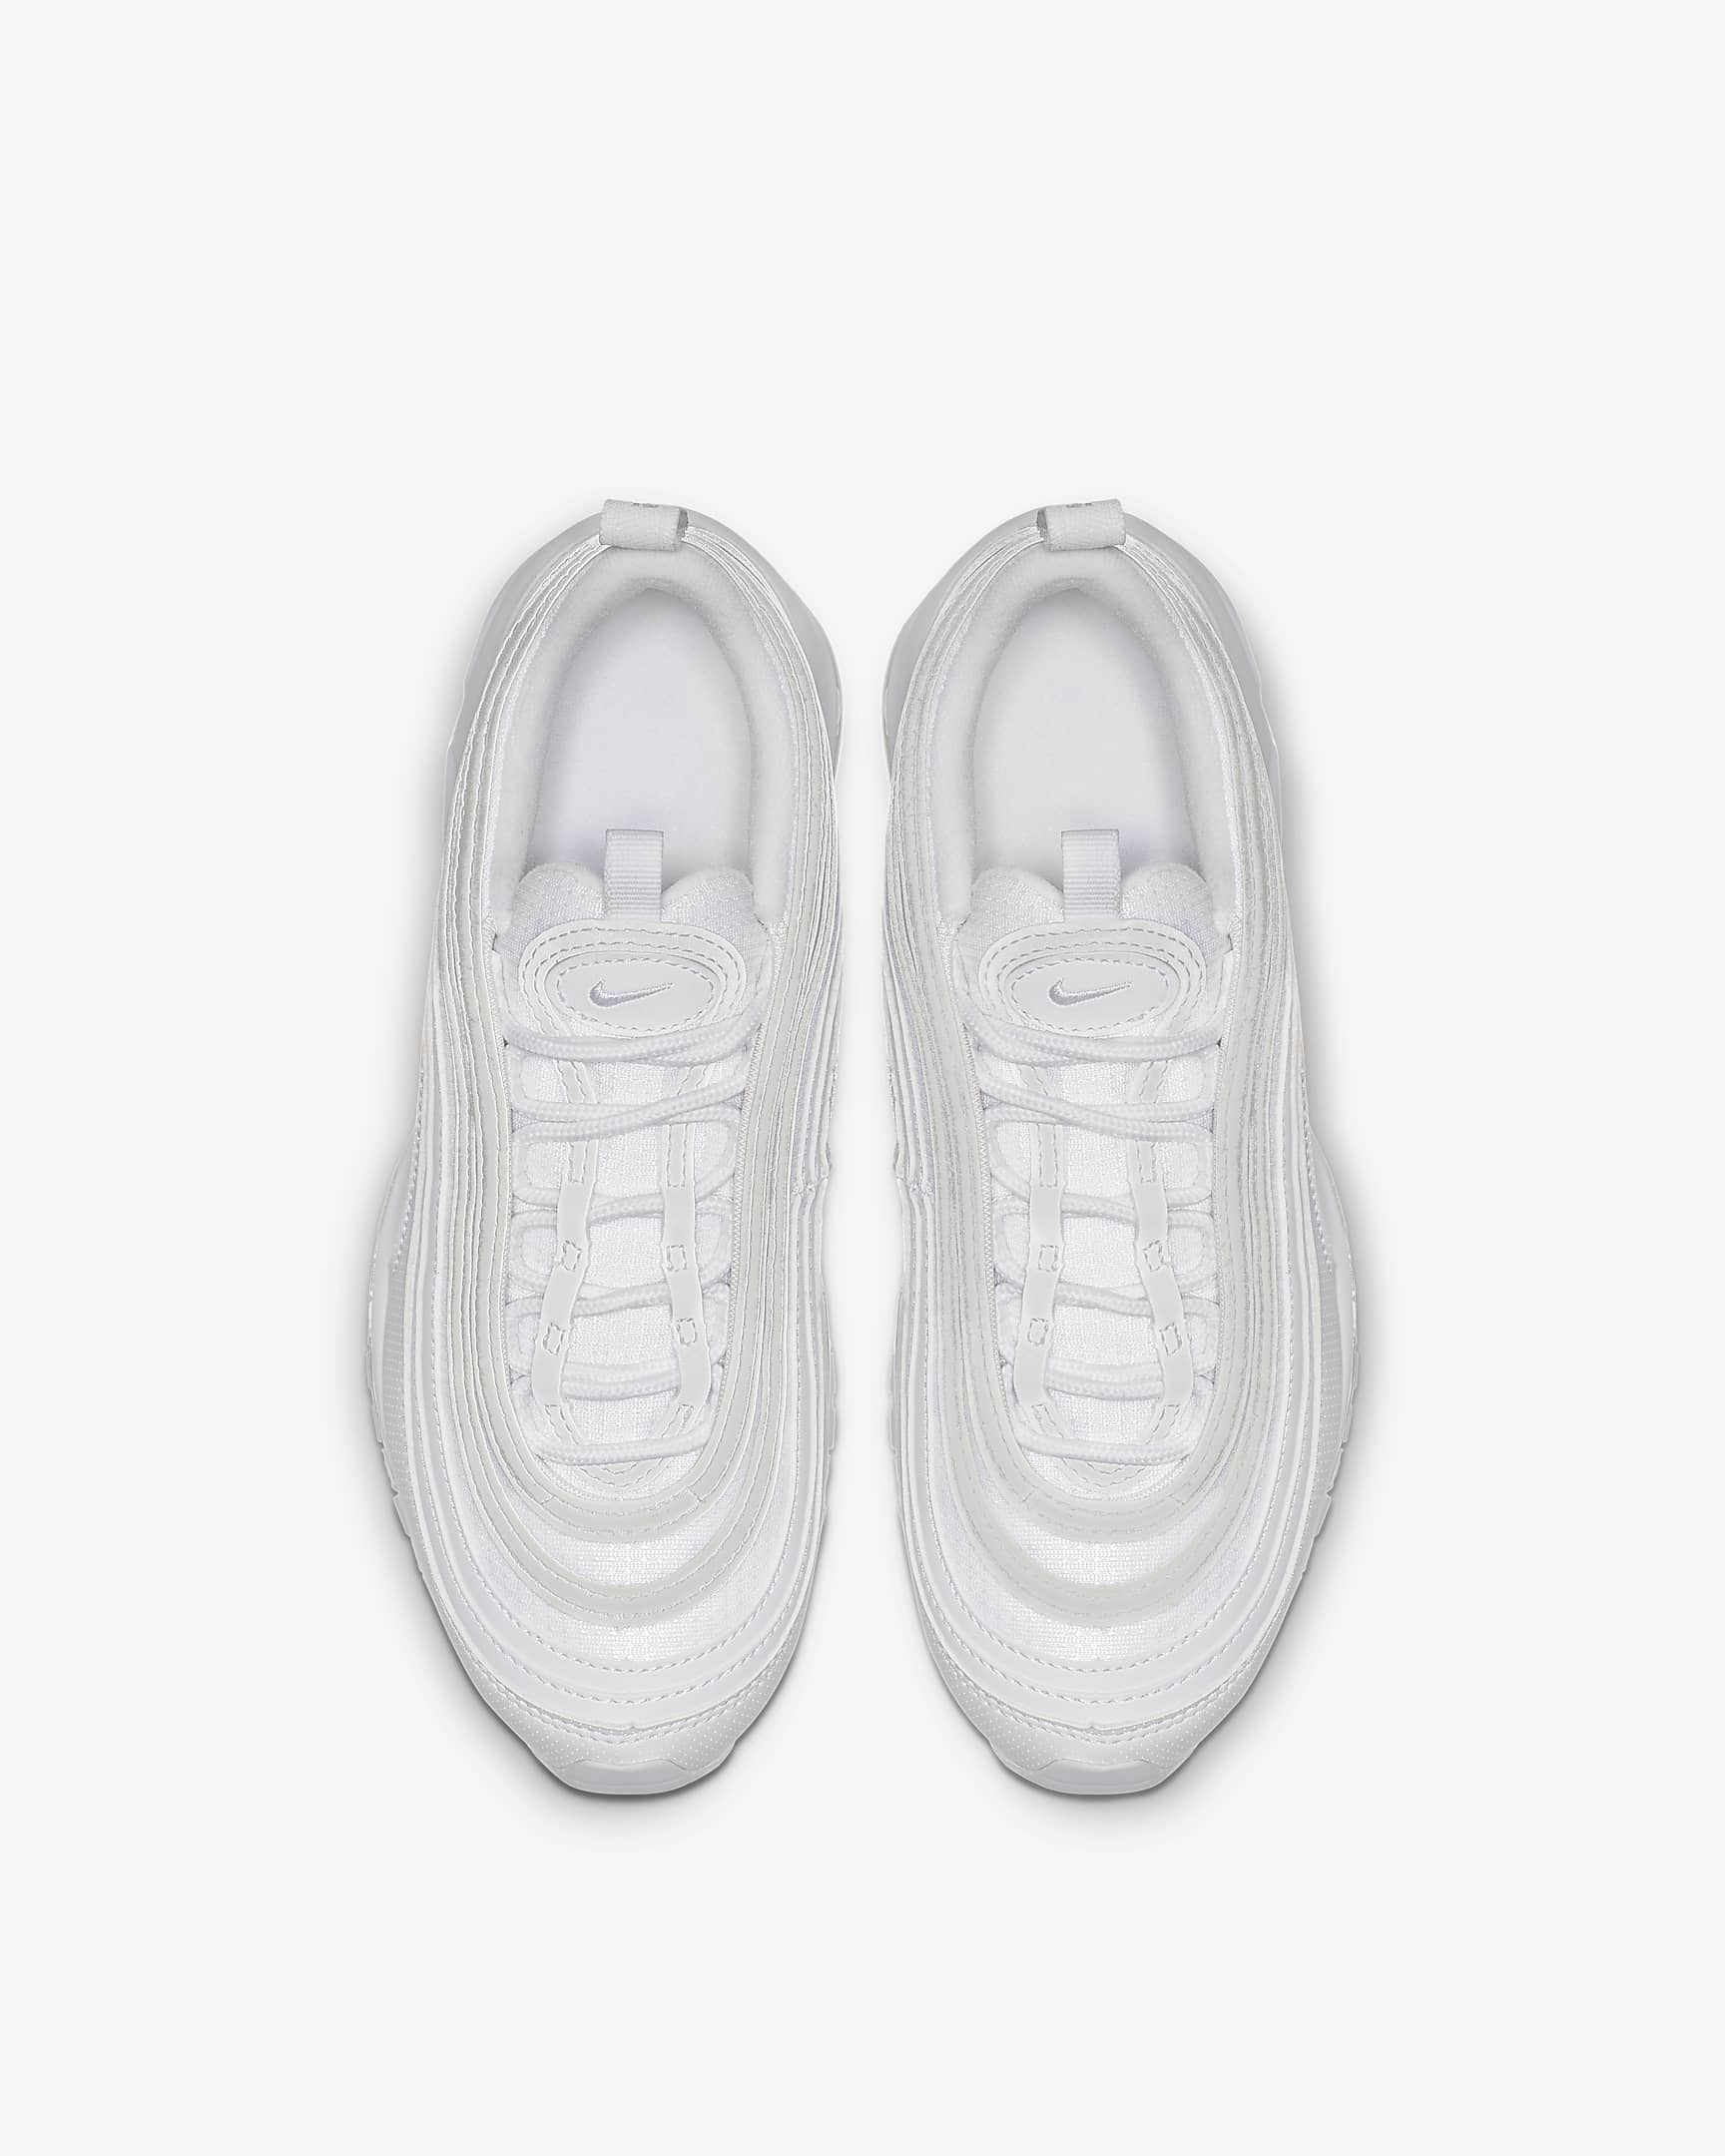 Nike Air Max 97 Older Kids' Shoes - White/Metallic Silver/White